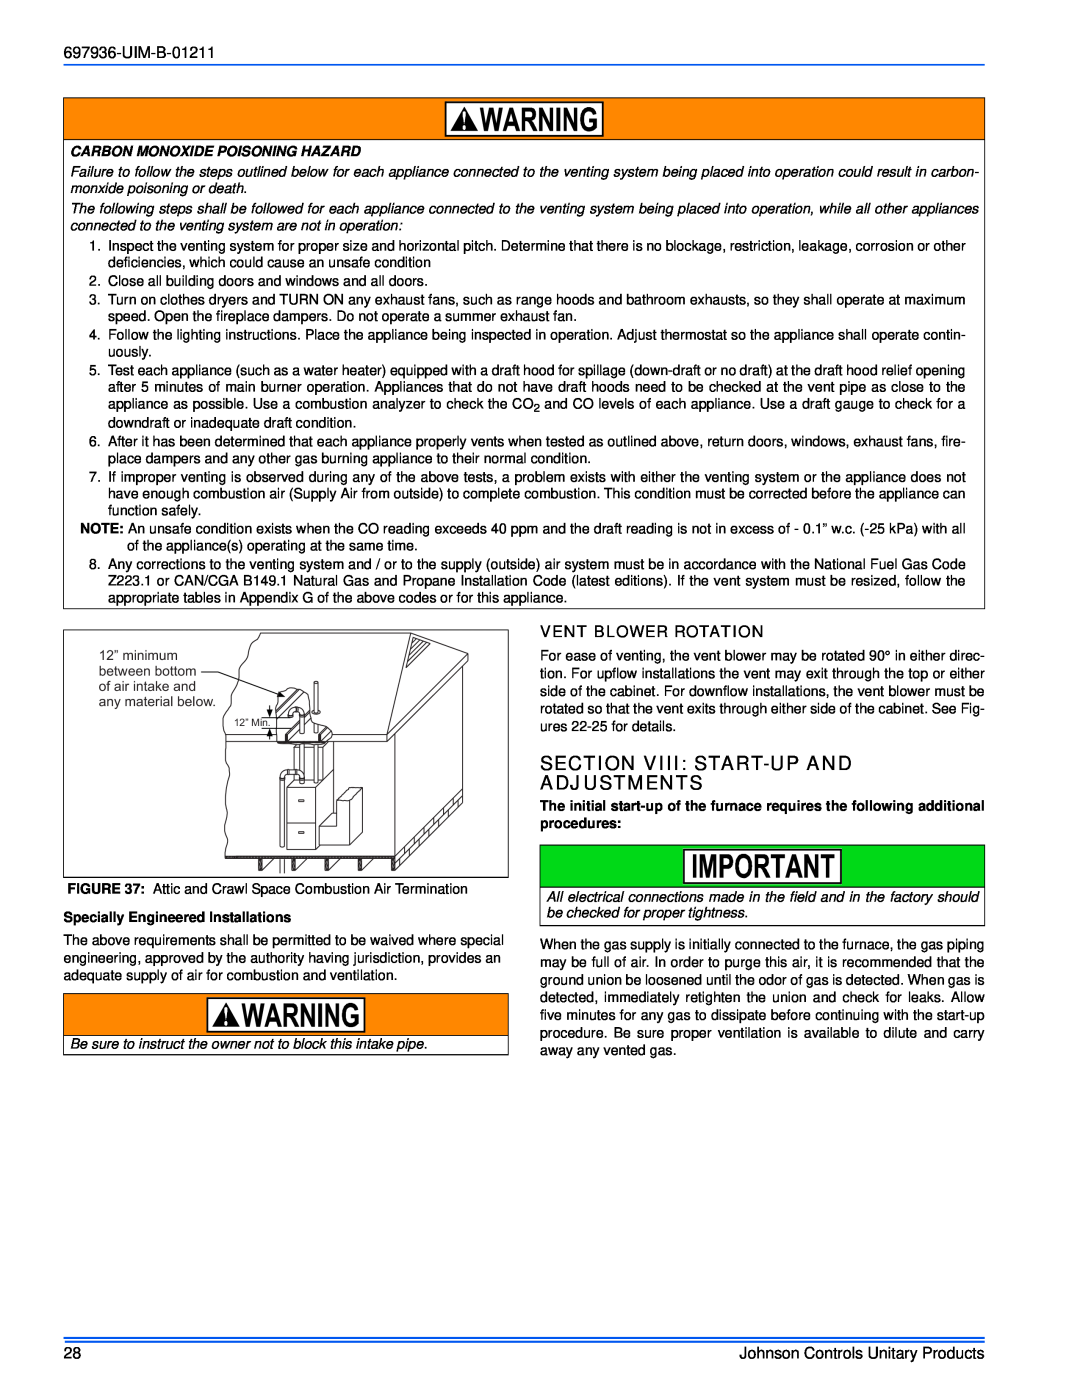 Johnson Controls TM9X*MP installation manual Section Viii Start-Upand Adjustments, UIM-B-01211, Vent Blower Rotation 